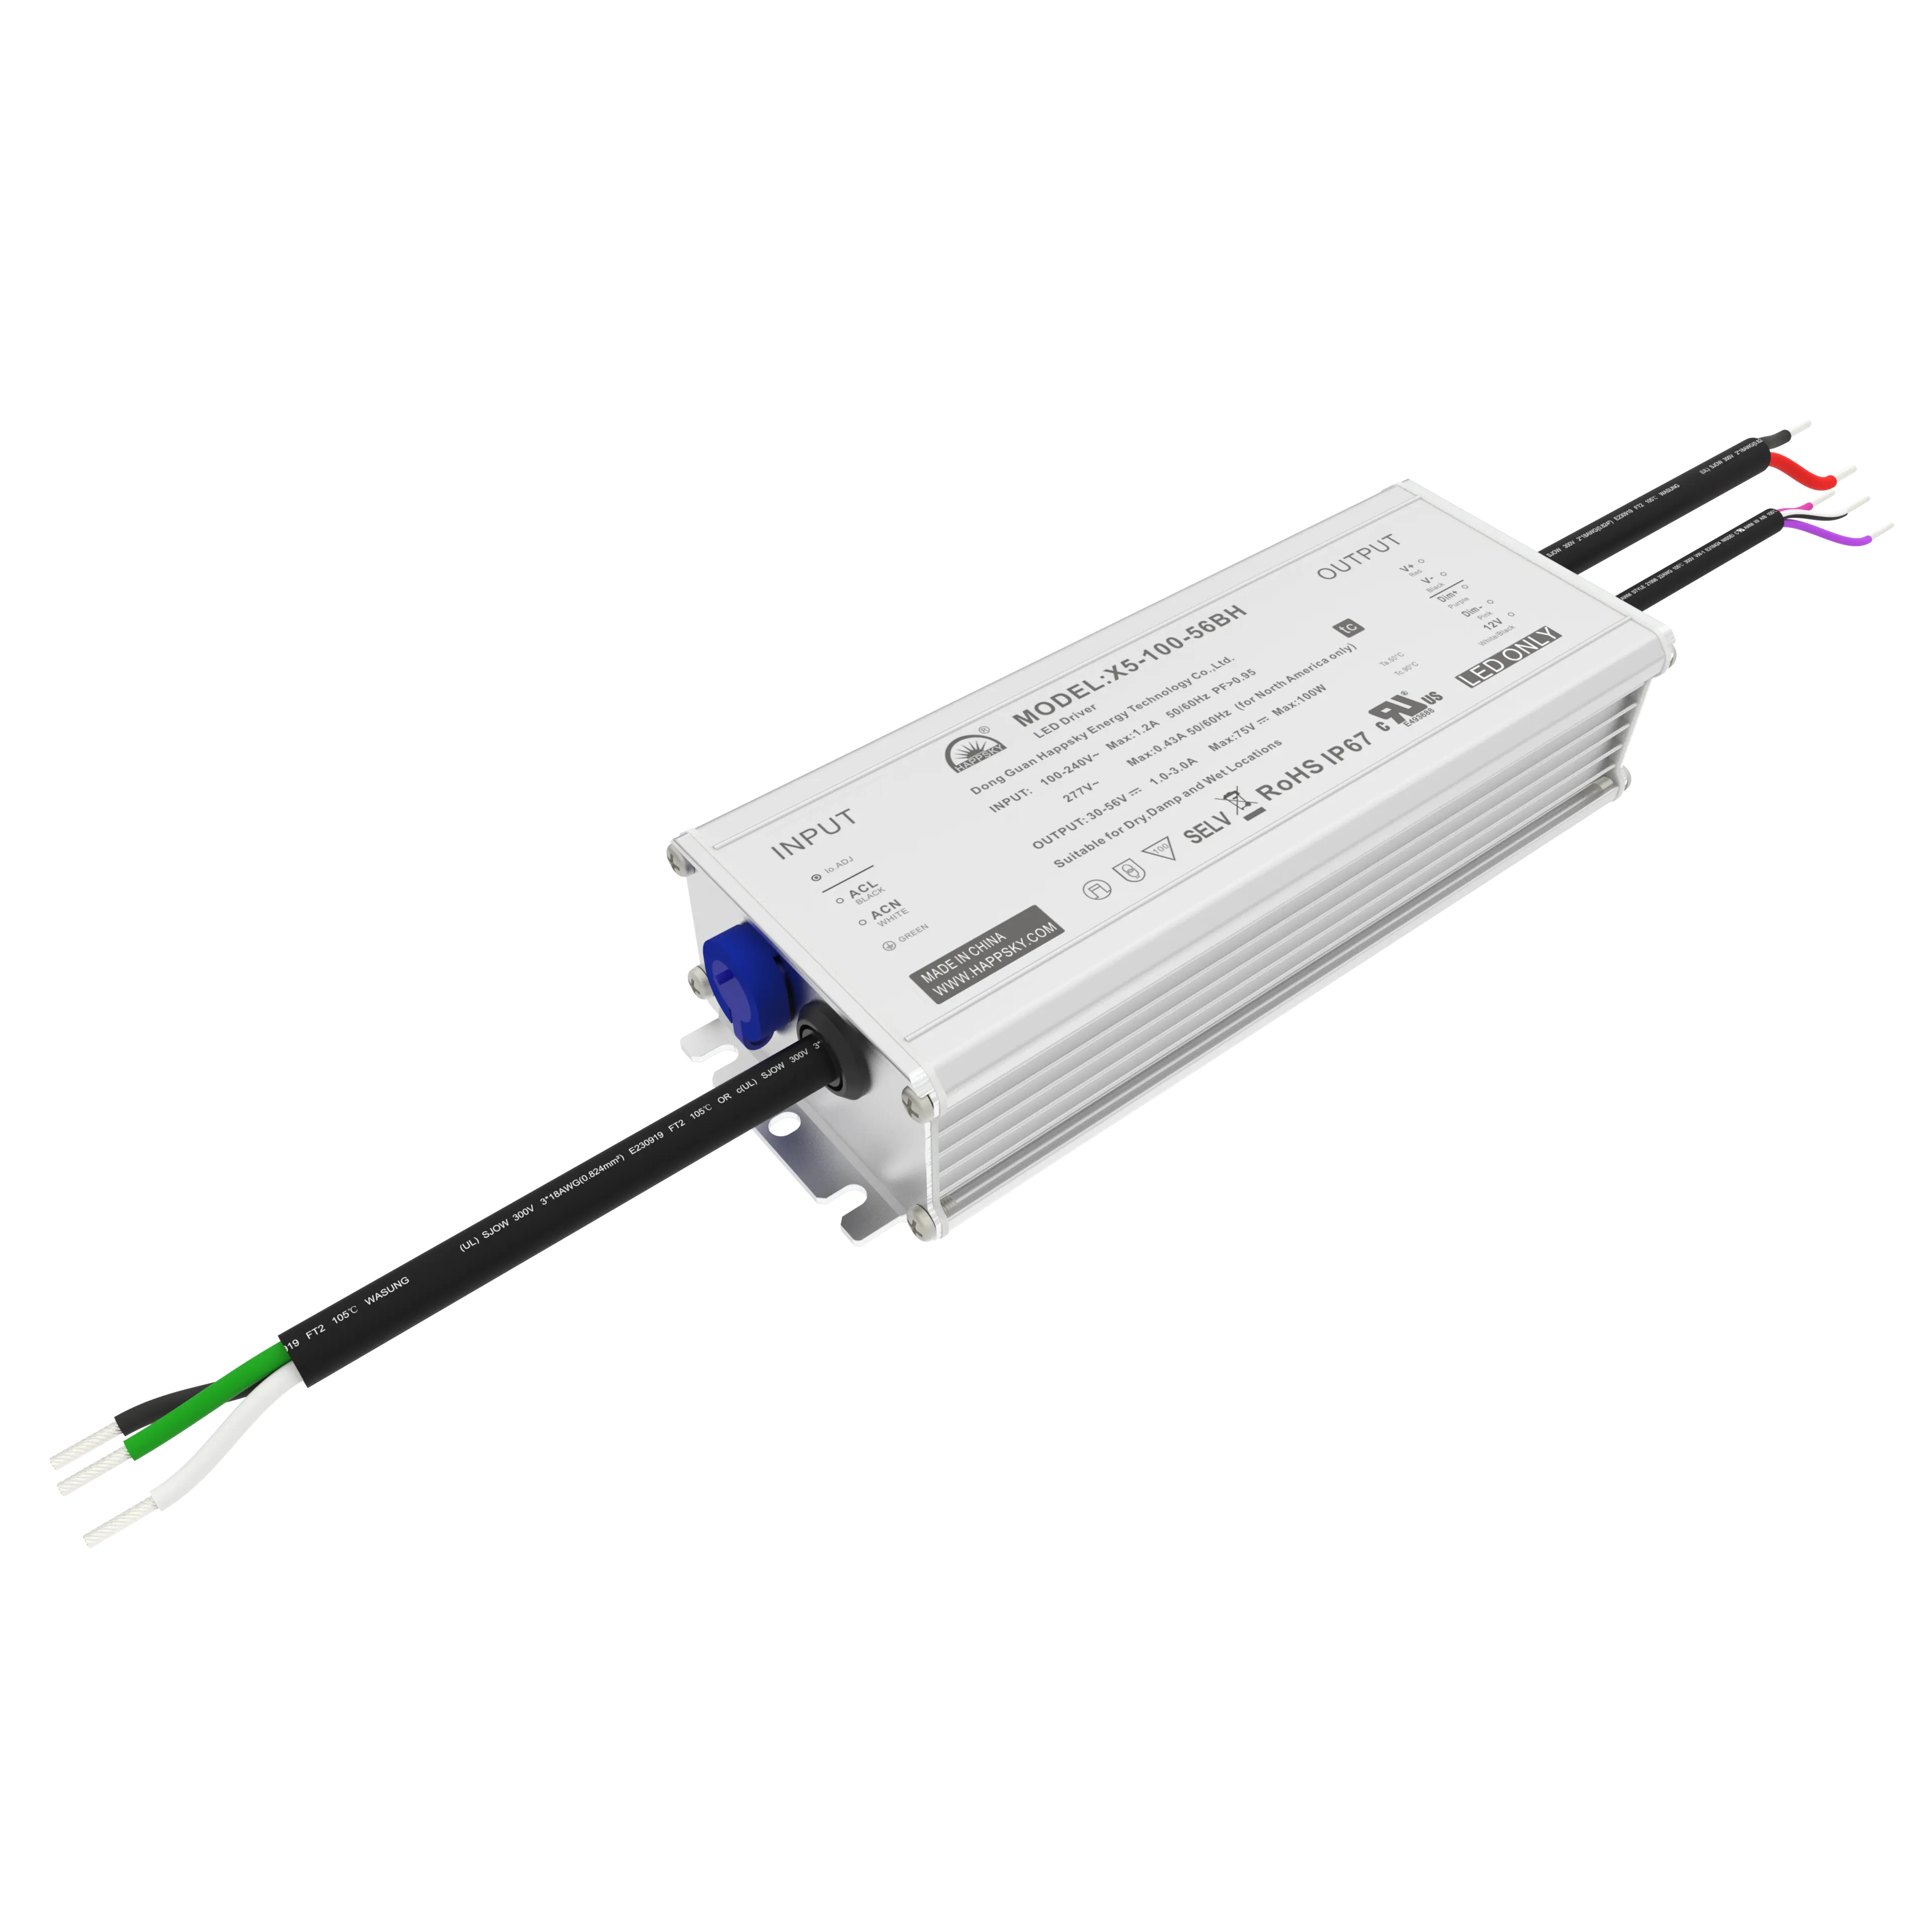 100W Sin parpadeo IP67 Controlador LED a prueba de agua Fuente de alimentación Led de corriente constante 0-10V PWM Resistencia Controlador Led regulable